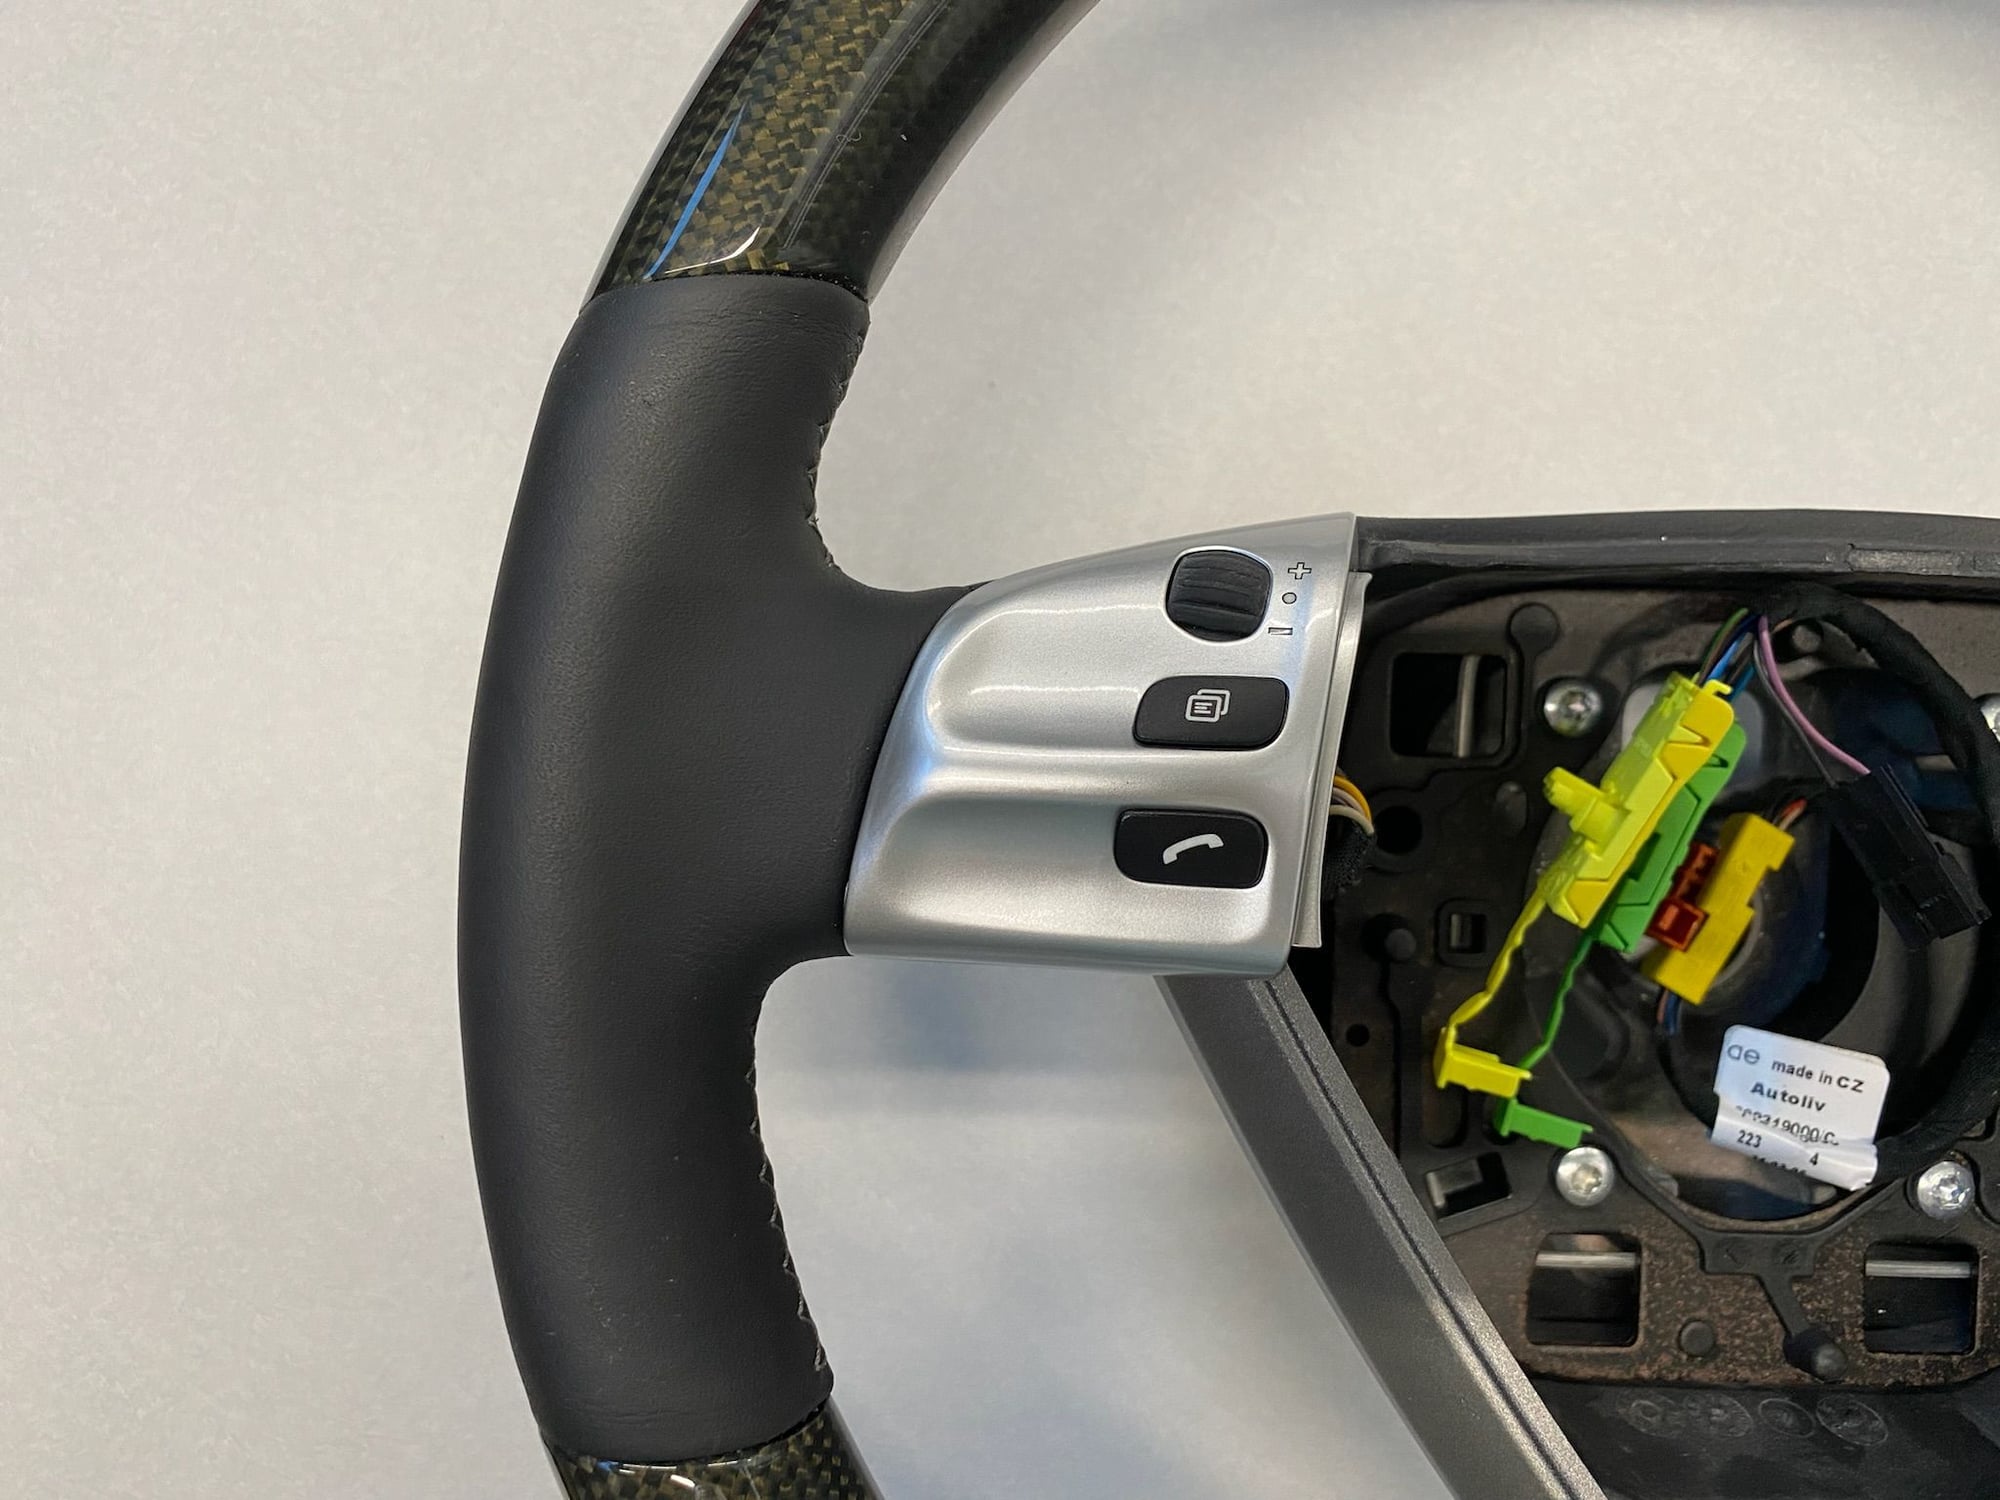 Steering/Suspension - Porsche 997/987 OEM Carbon Fiber & Black Leather Multifunction Steering Wheel - New - 0  All Models - Dallas, TX 75231, United States